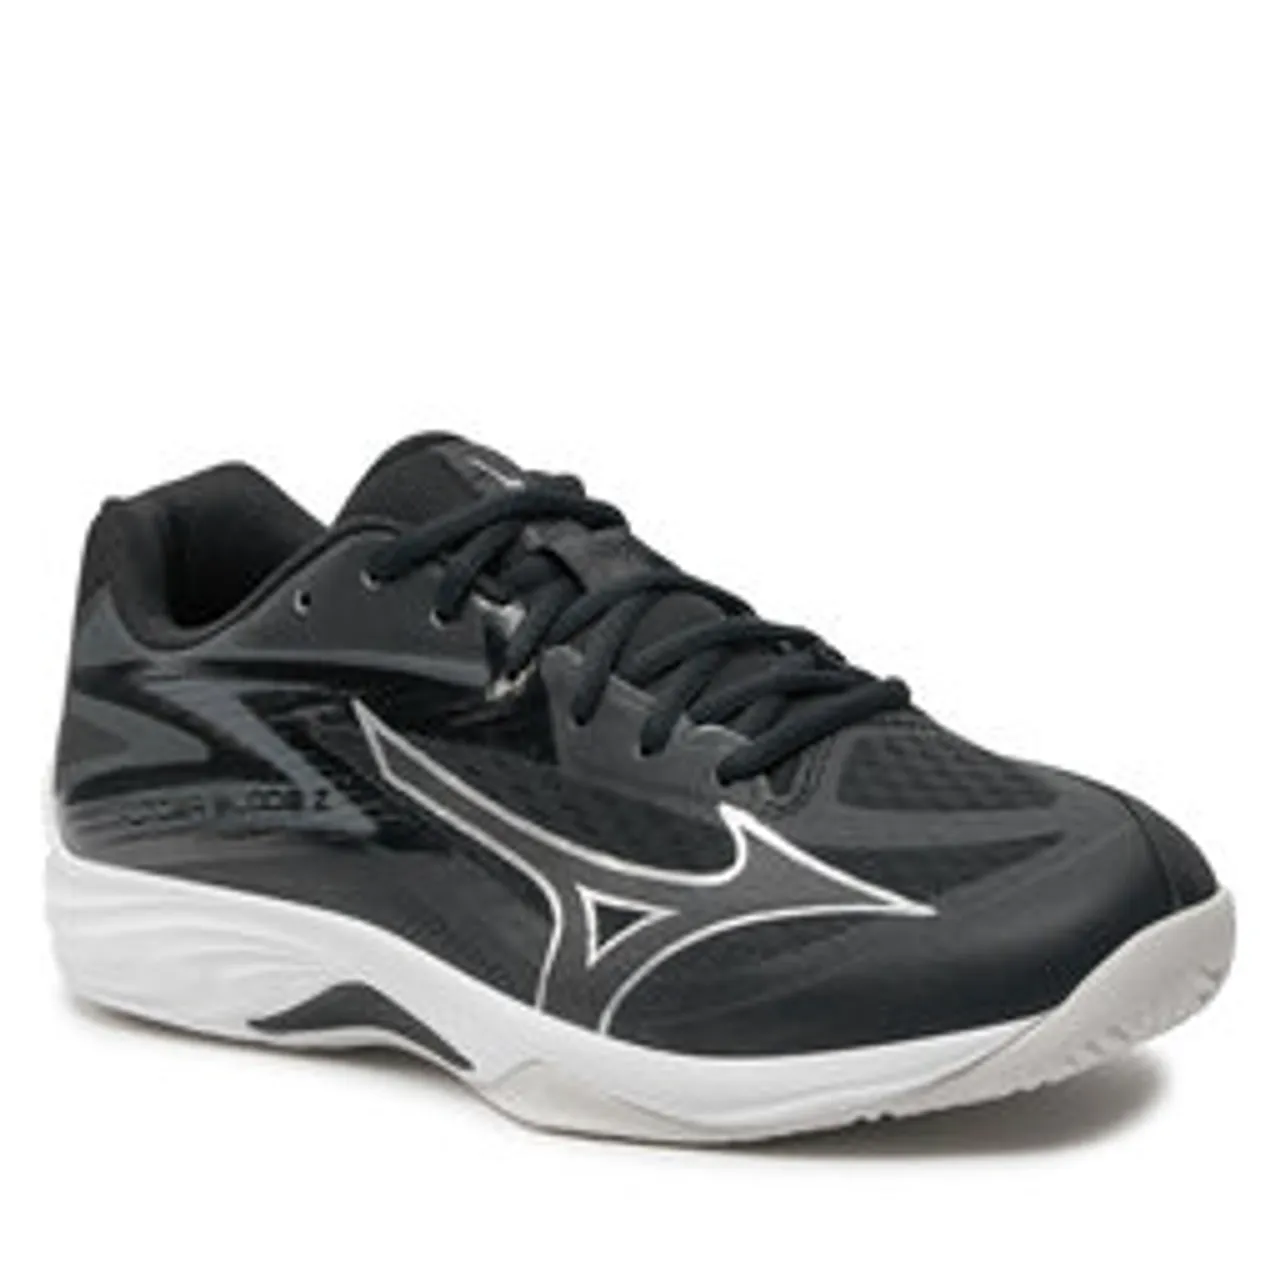 Schuhe Mizuno Thunder Blade Z V1GA2370 Black/Silver 52